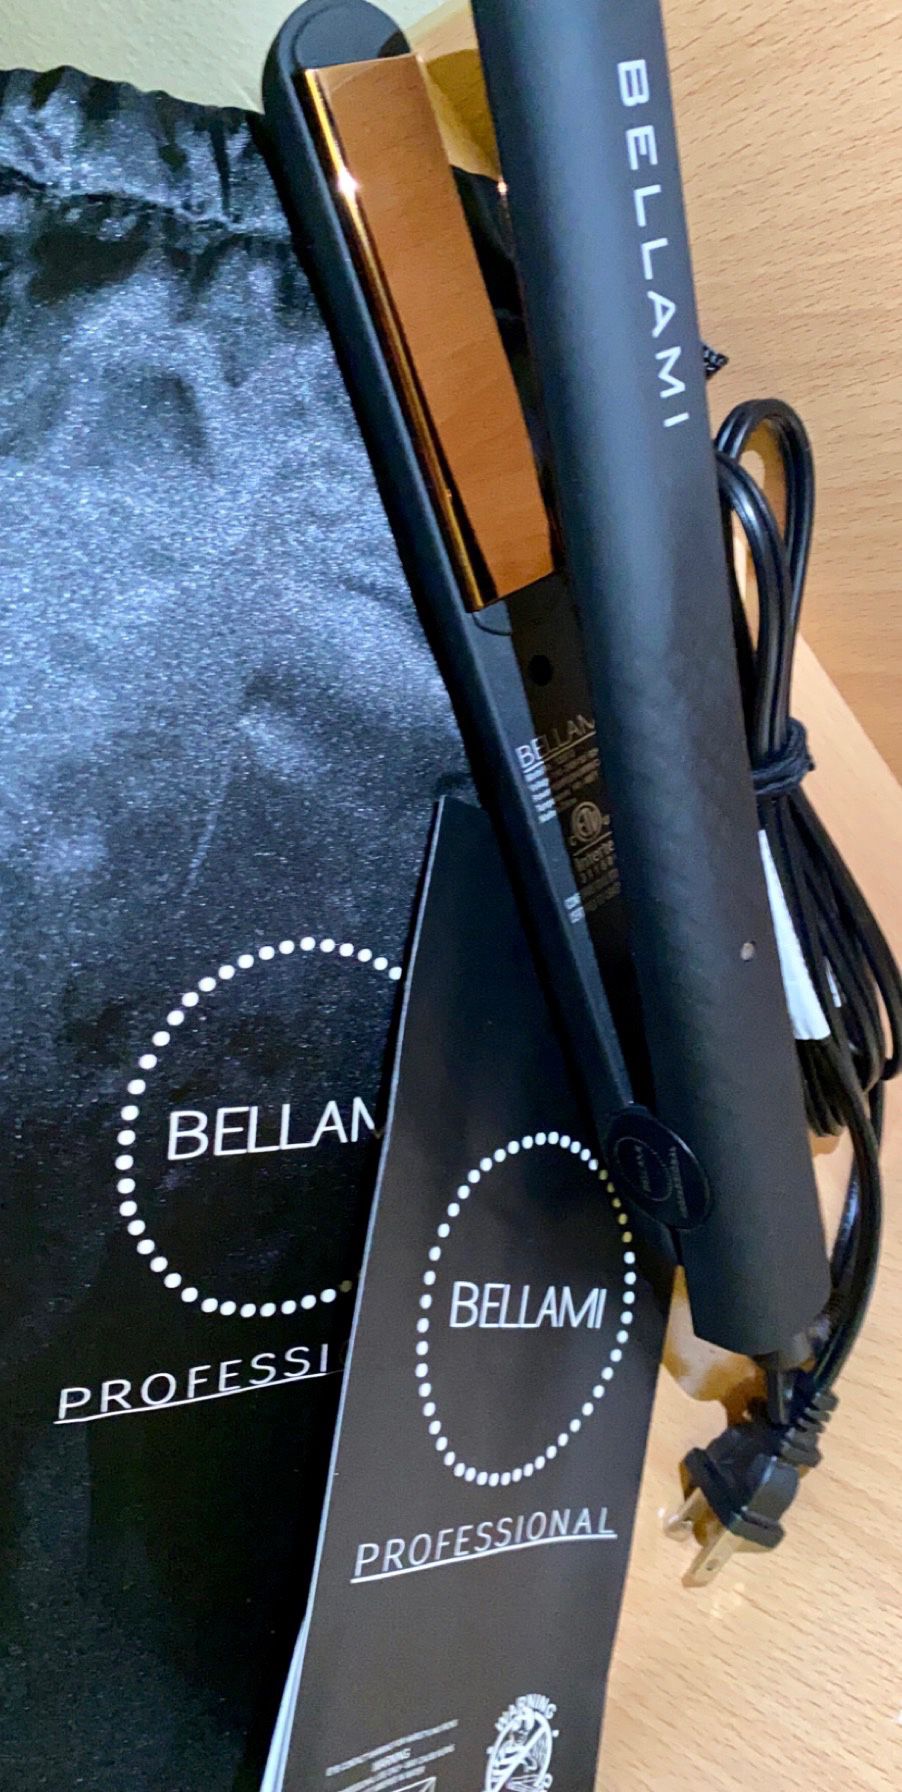 Bellami hair straightener